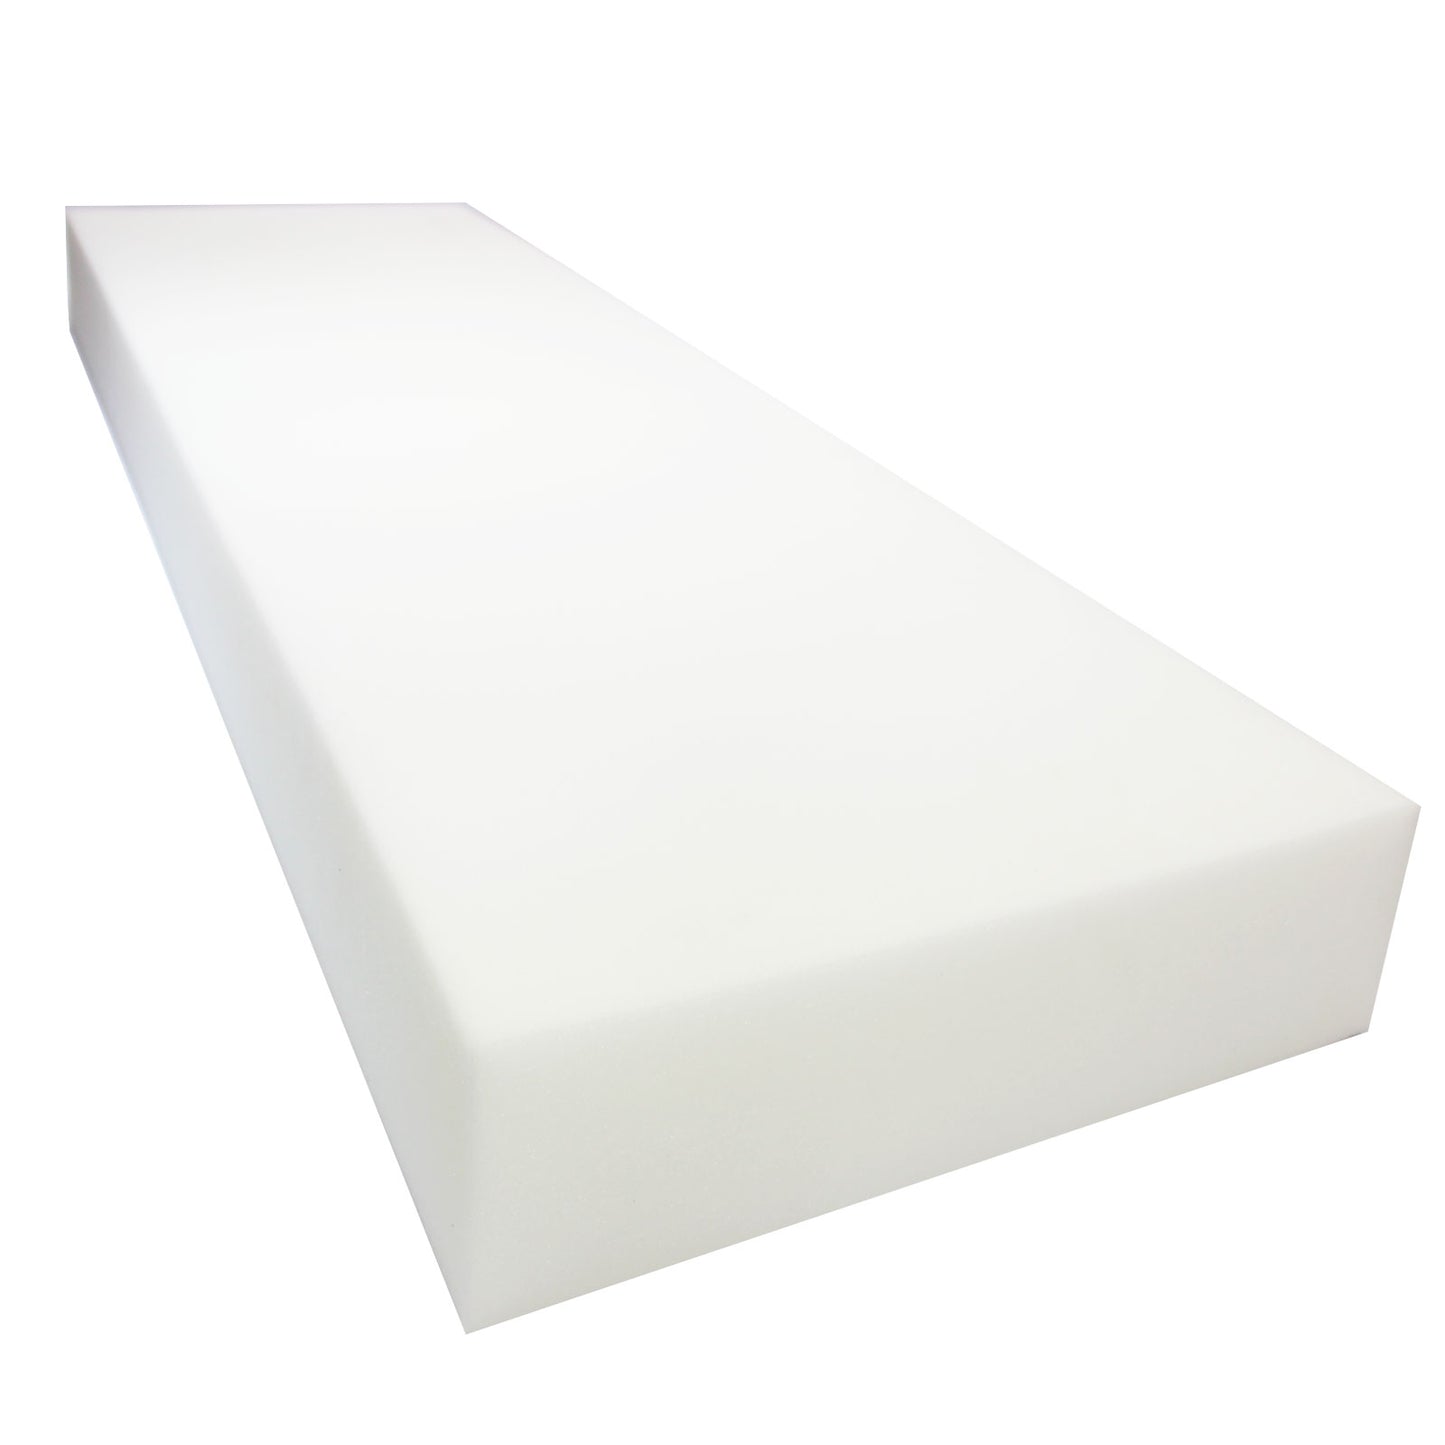  4 x 24x 24 Upholstery Foam Cushion Medium Density